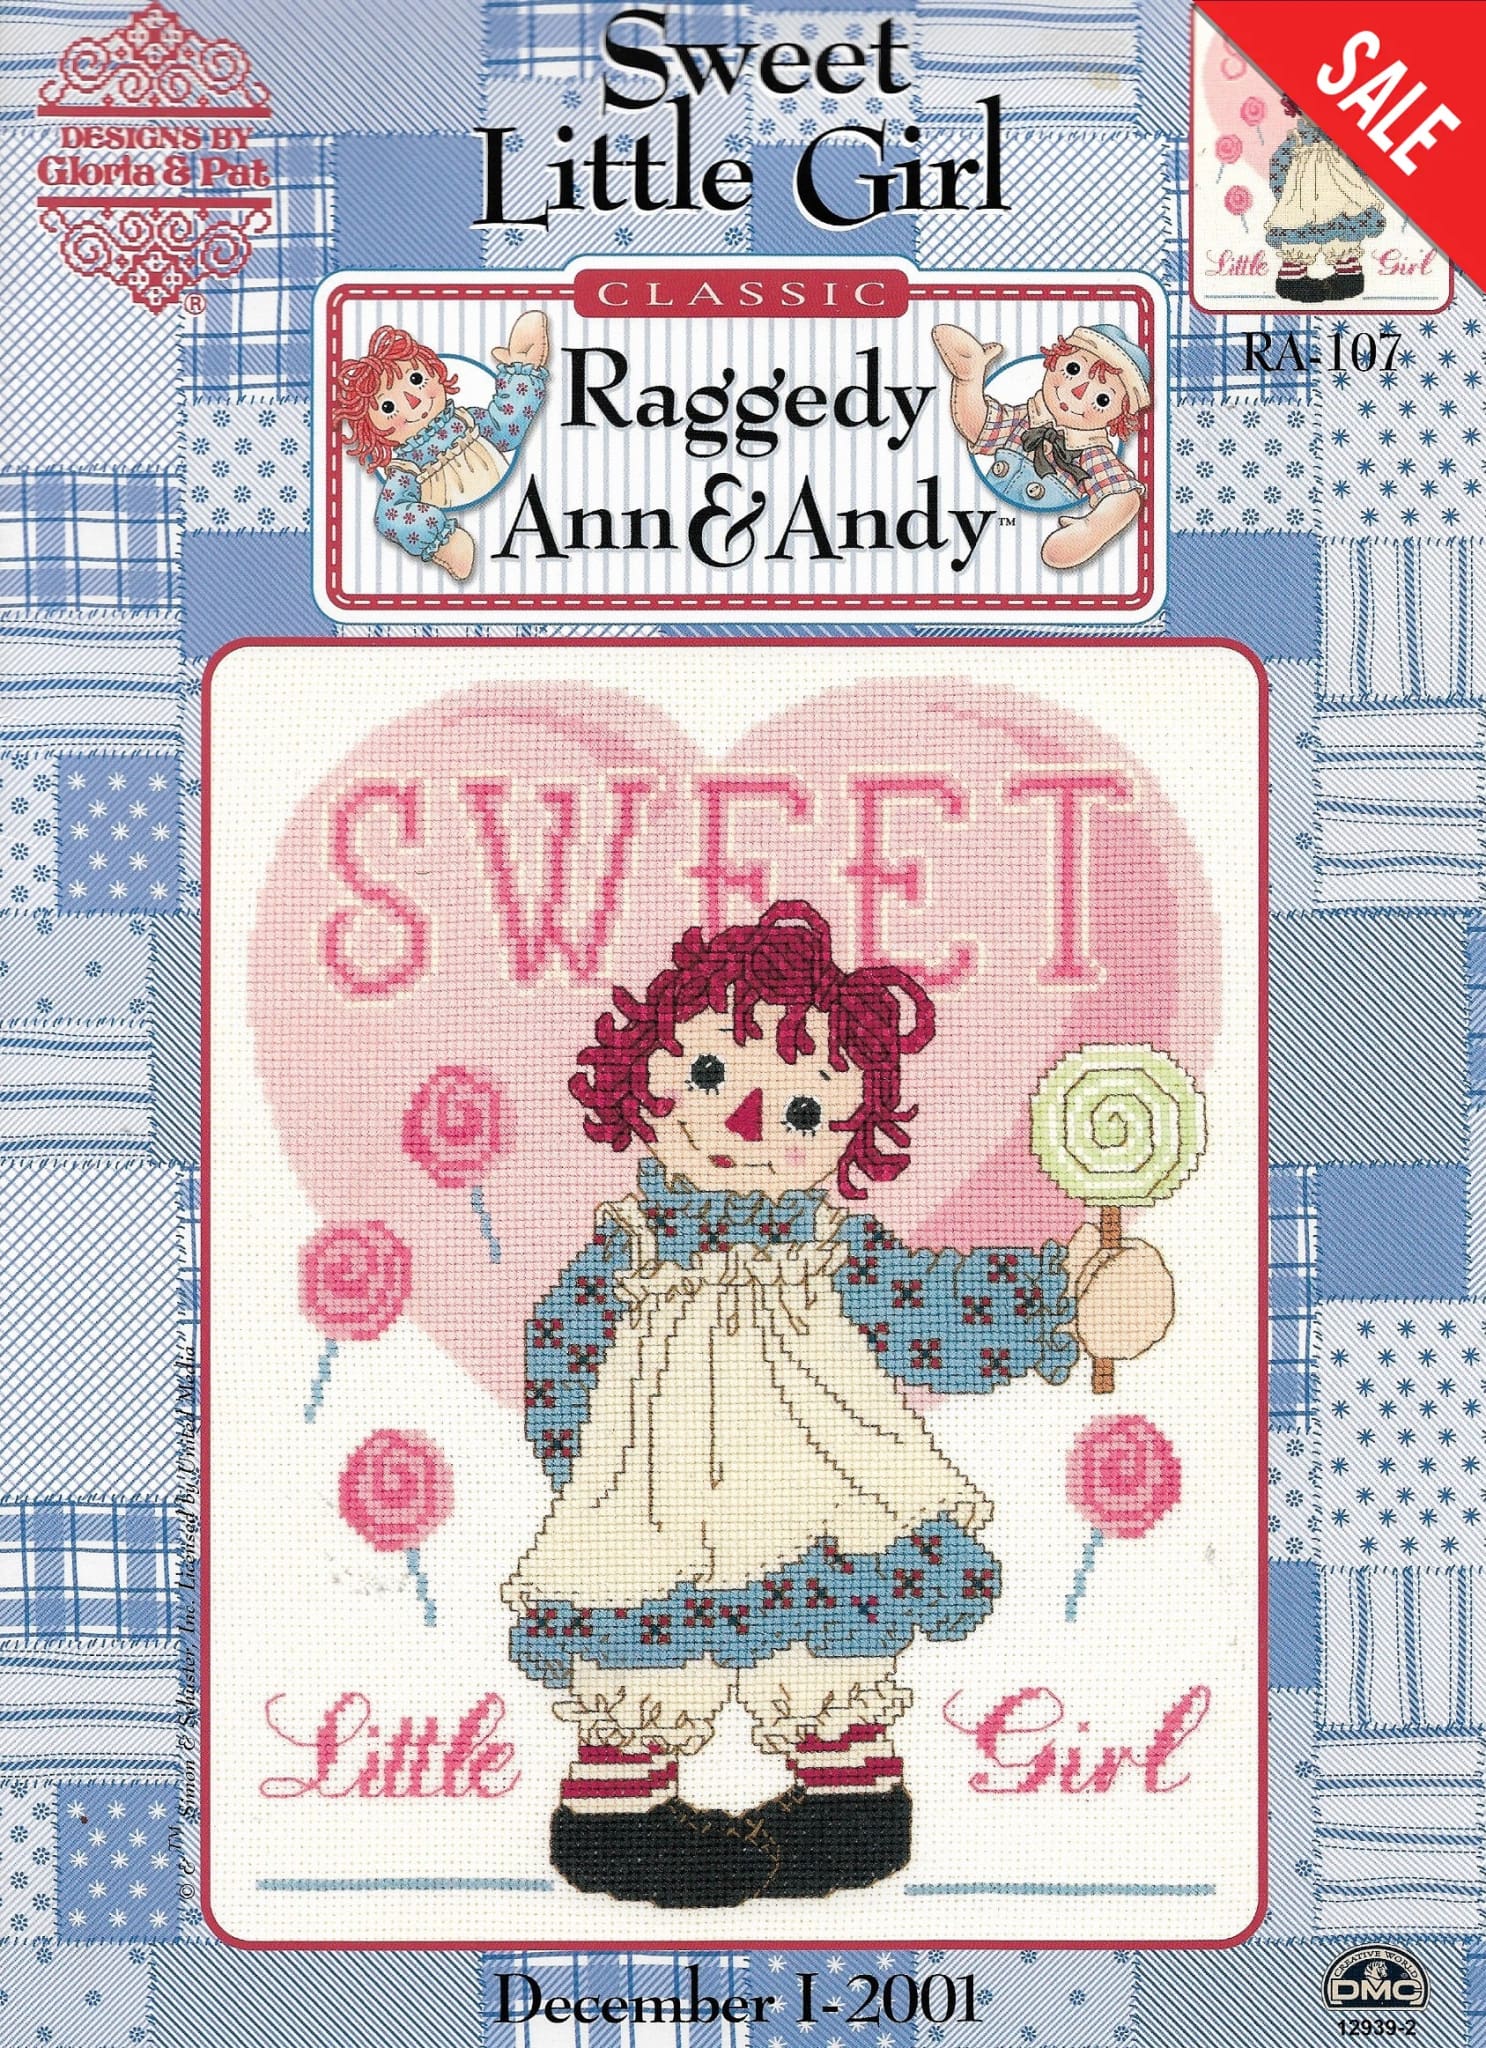 Gloria & Pat Sweet Little Girl Raggedy Ann & Andy cross stitch pattern